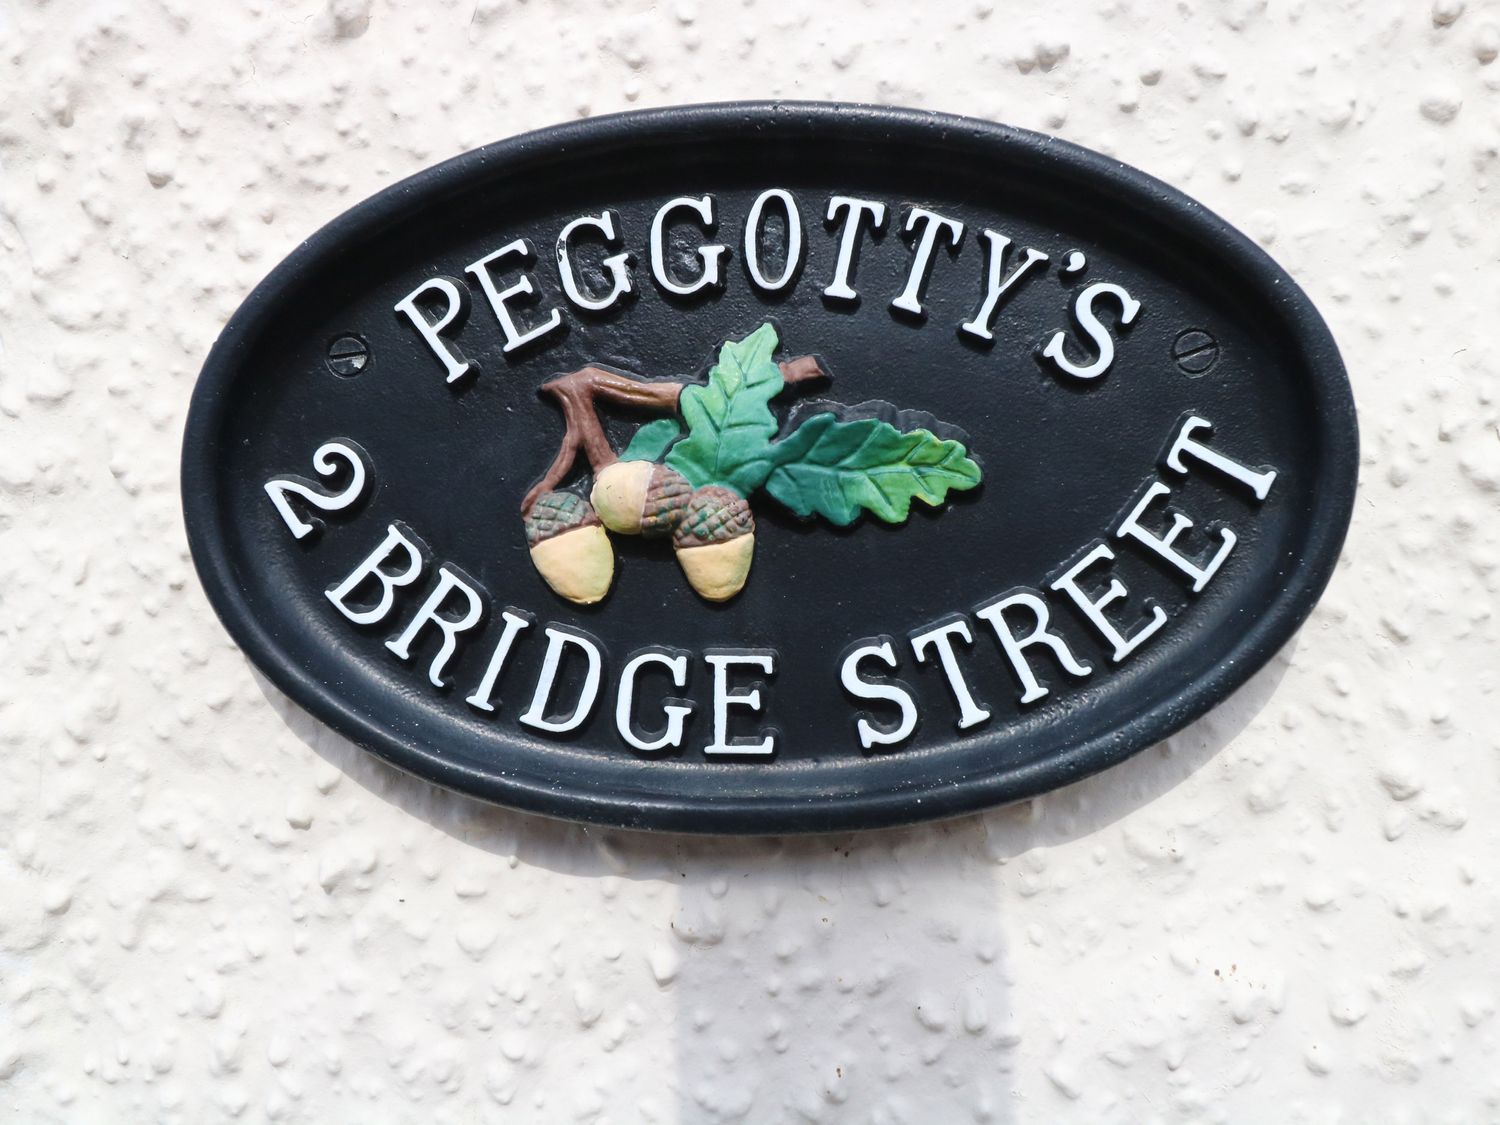 Peggotty's, East of England